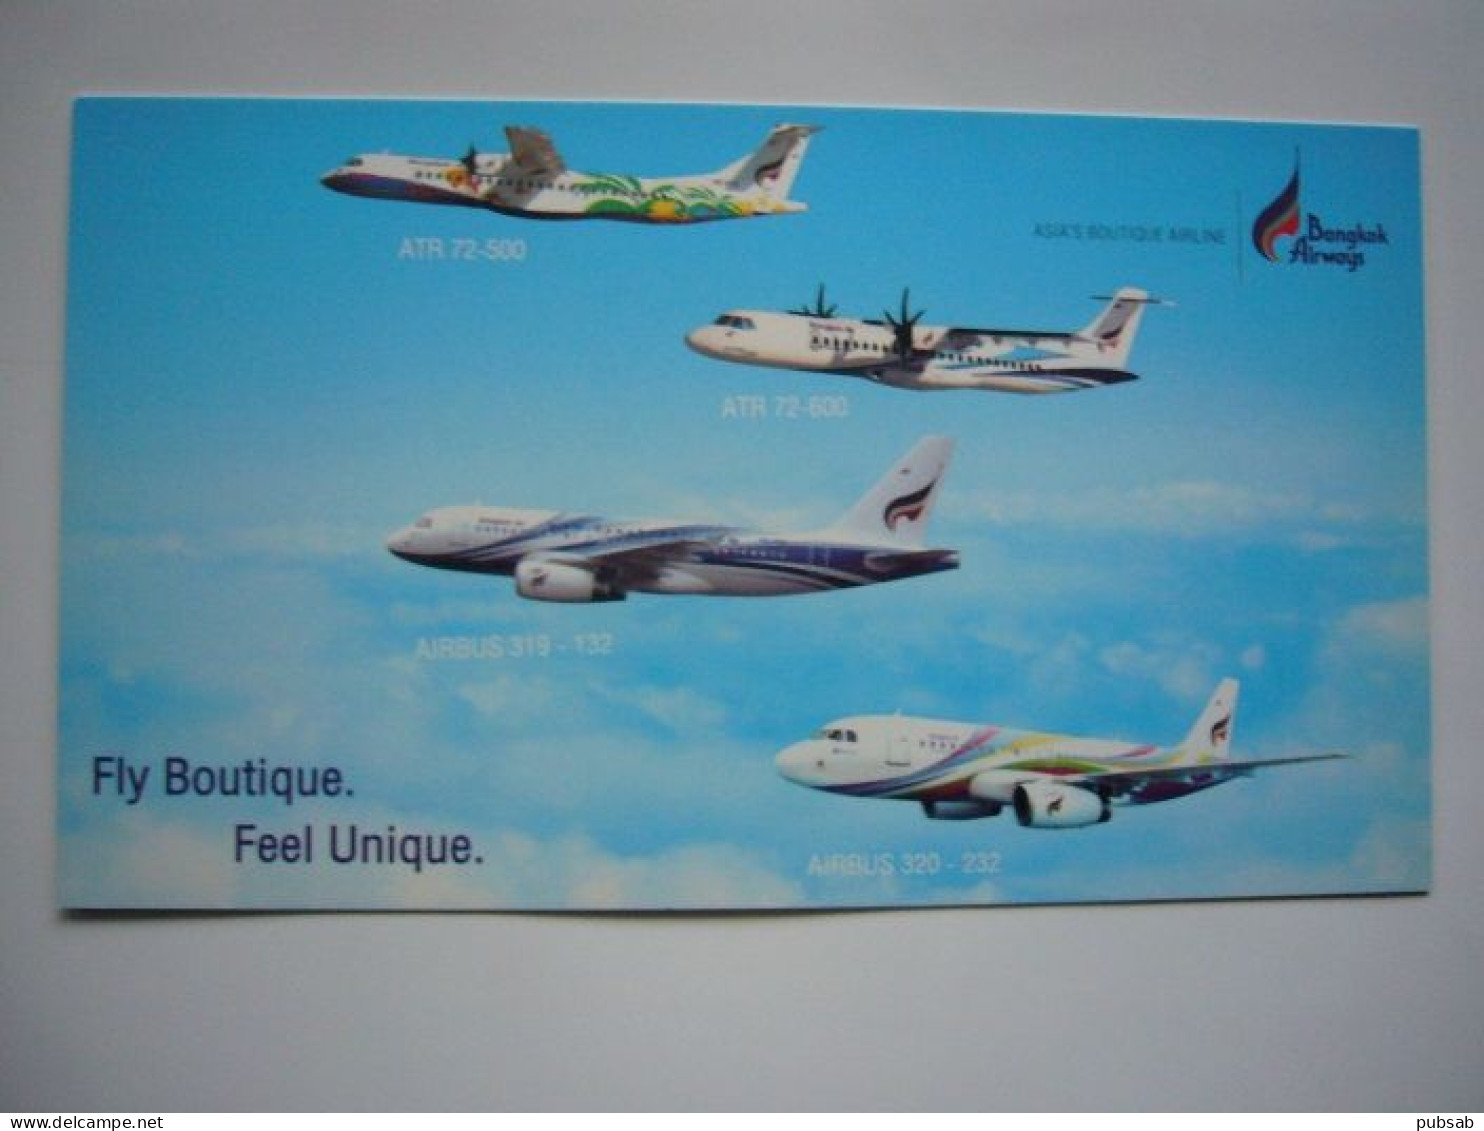 Avion / Airplane / BANGKOK AIRWAYS / ATR 72-500/600 - Airbus A319/320 / Airline Issue / Size: 10X18cm - 1946-....: Moderne